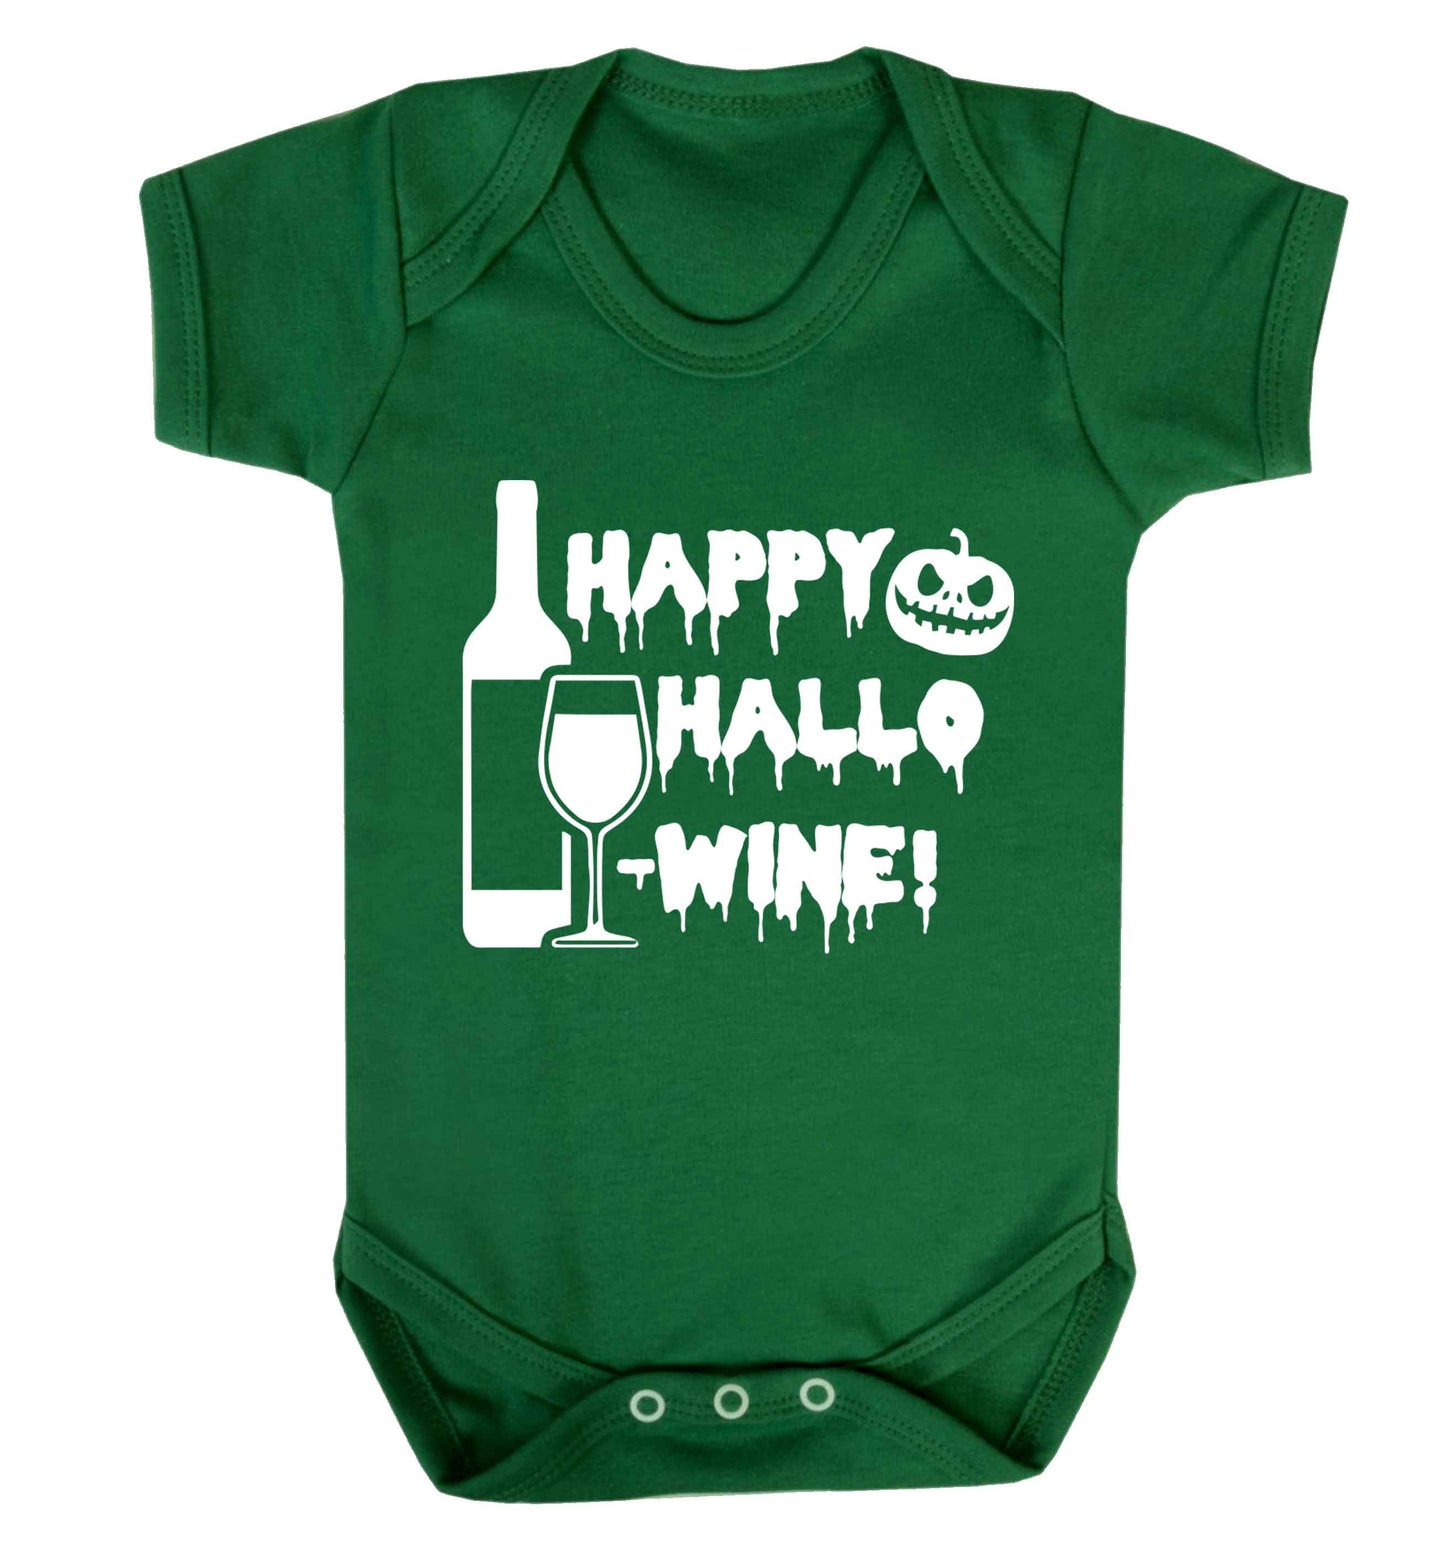 Happy hallow-wine Baby Vest green 18-24 months